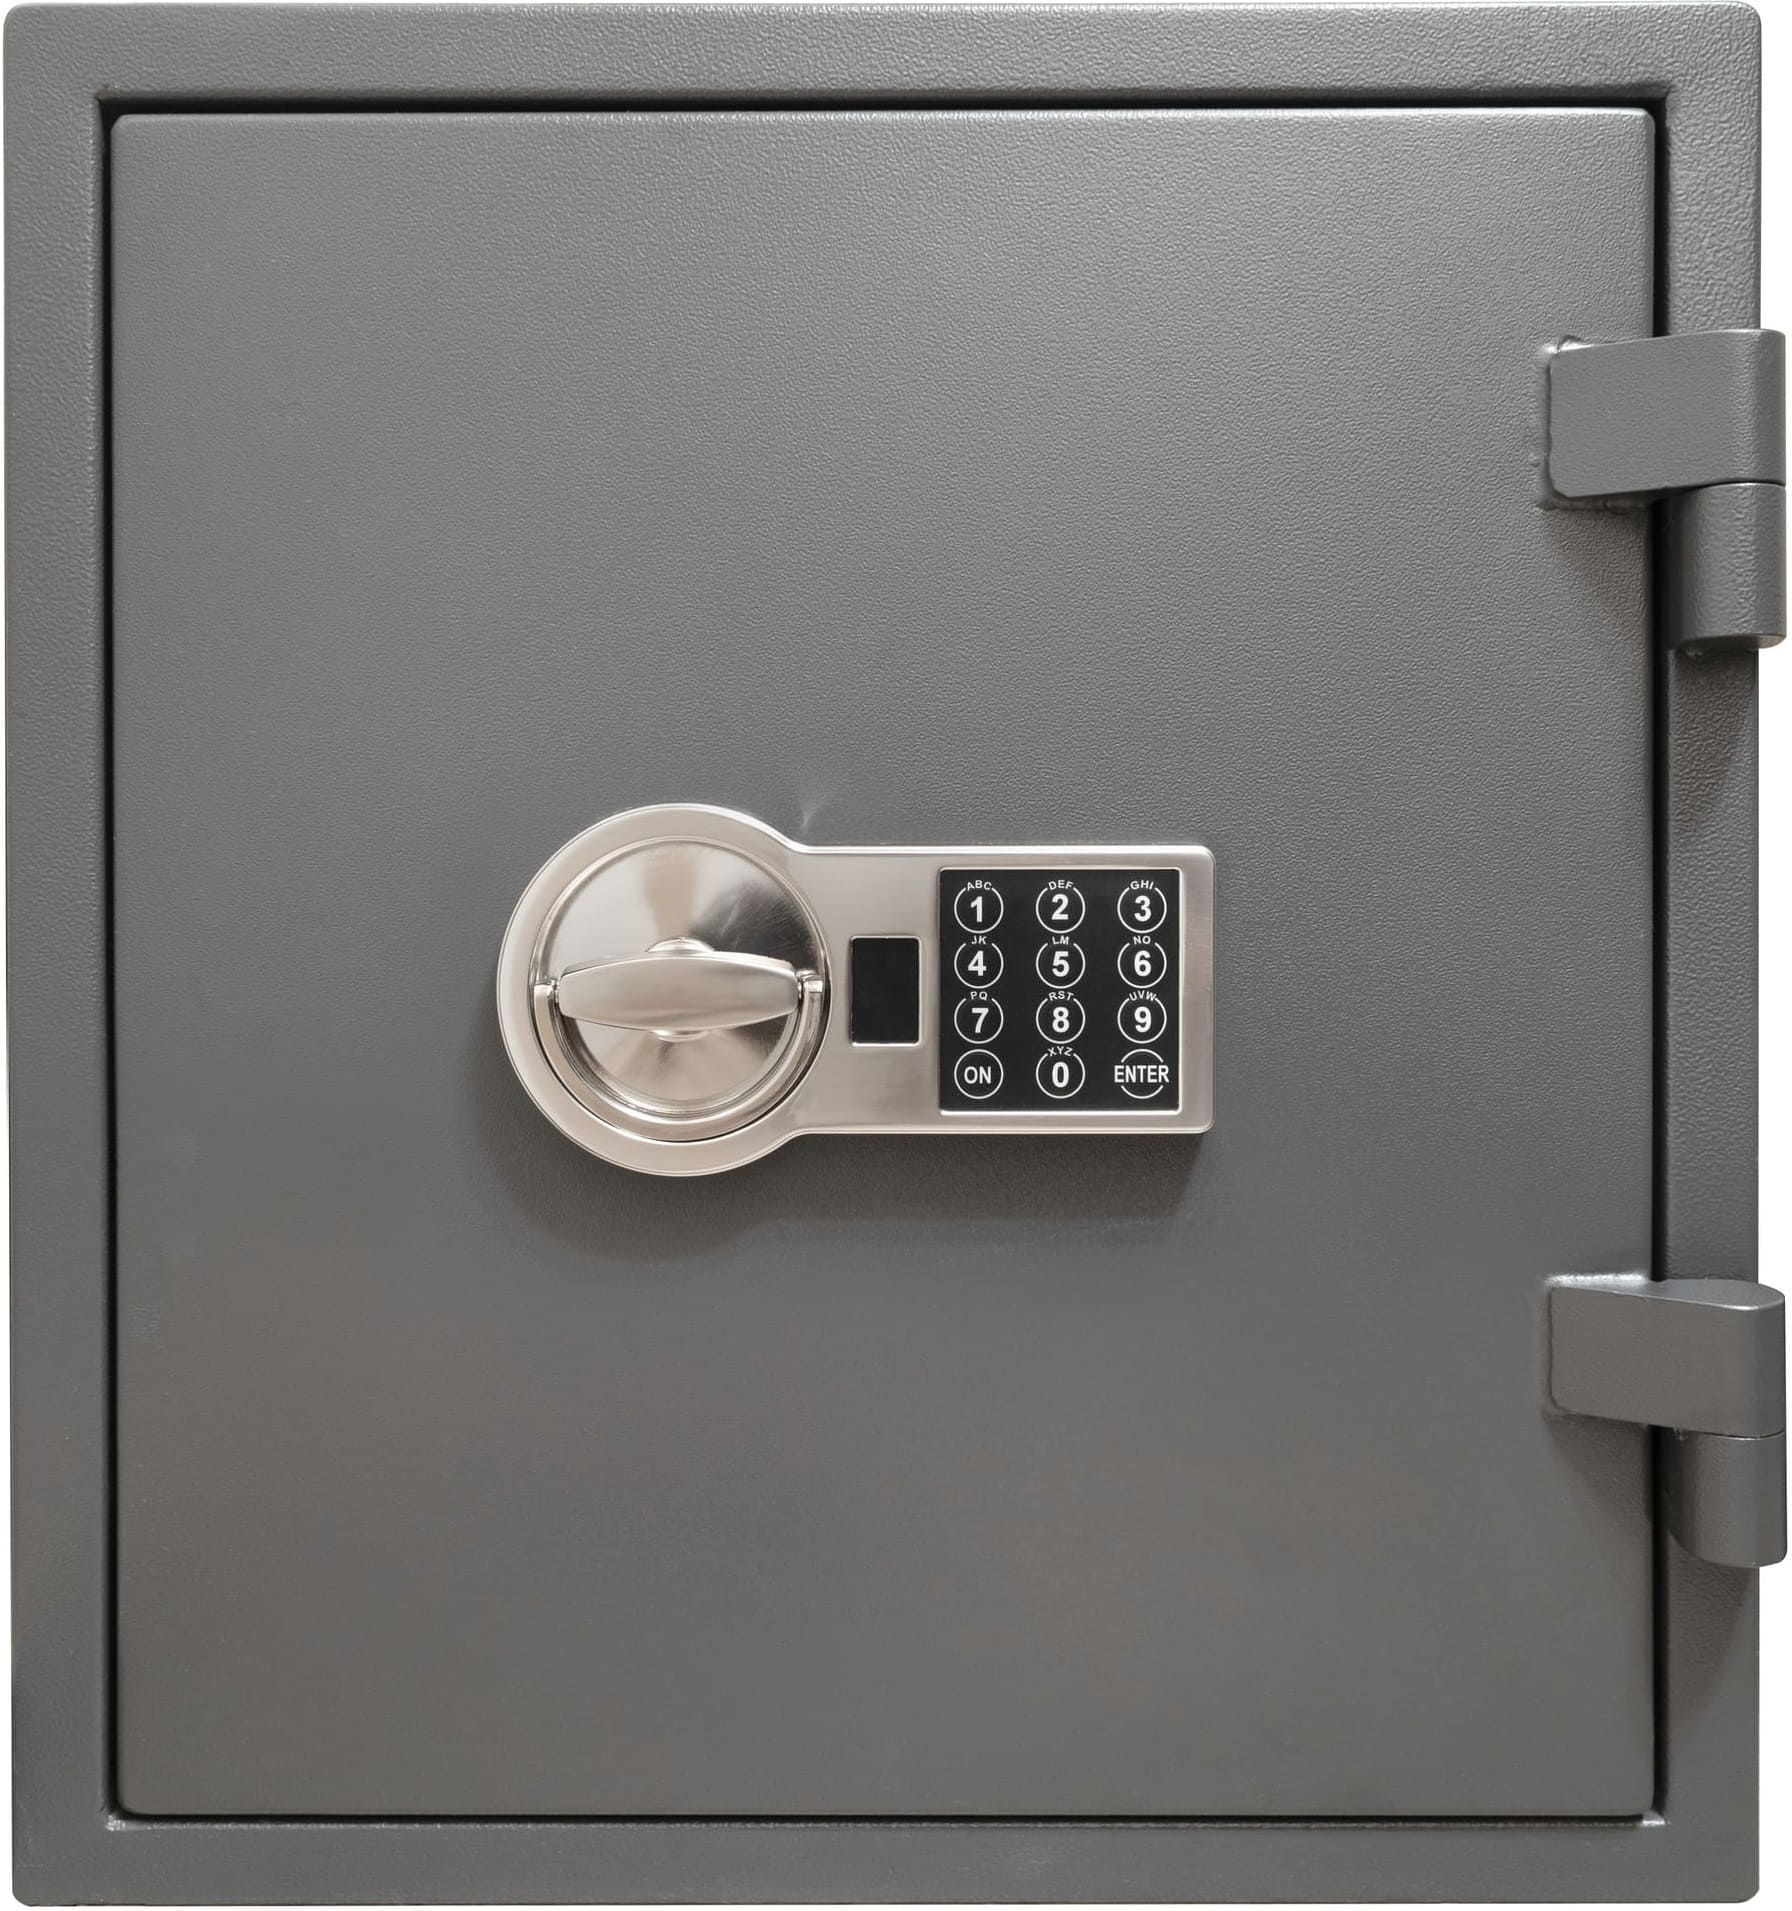 Locked safe with digital combination lock